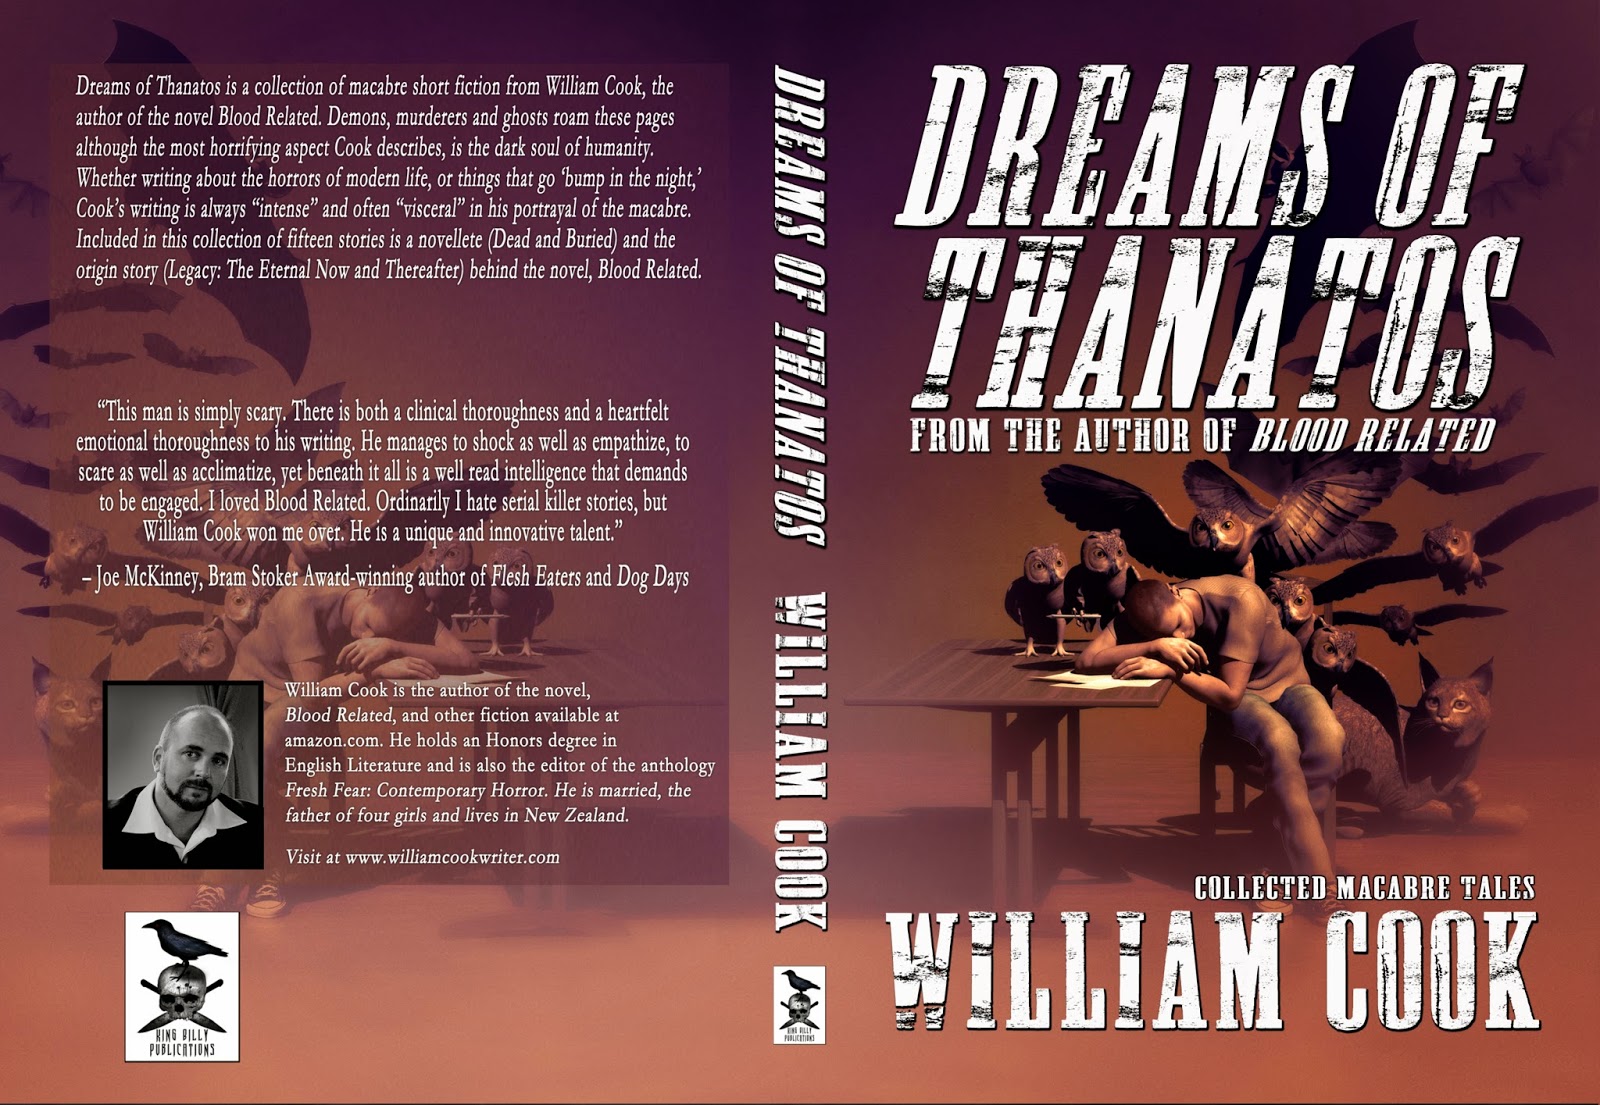 http://www.amazon.com/Dreams-Thanatos-Collected-Macabre-Tales/dp/1495994333/ref=la_B003PA513I_1_3?s=books&ie=UTF8&qid=1405901050&sr=1-3